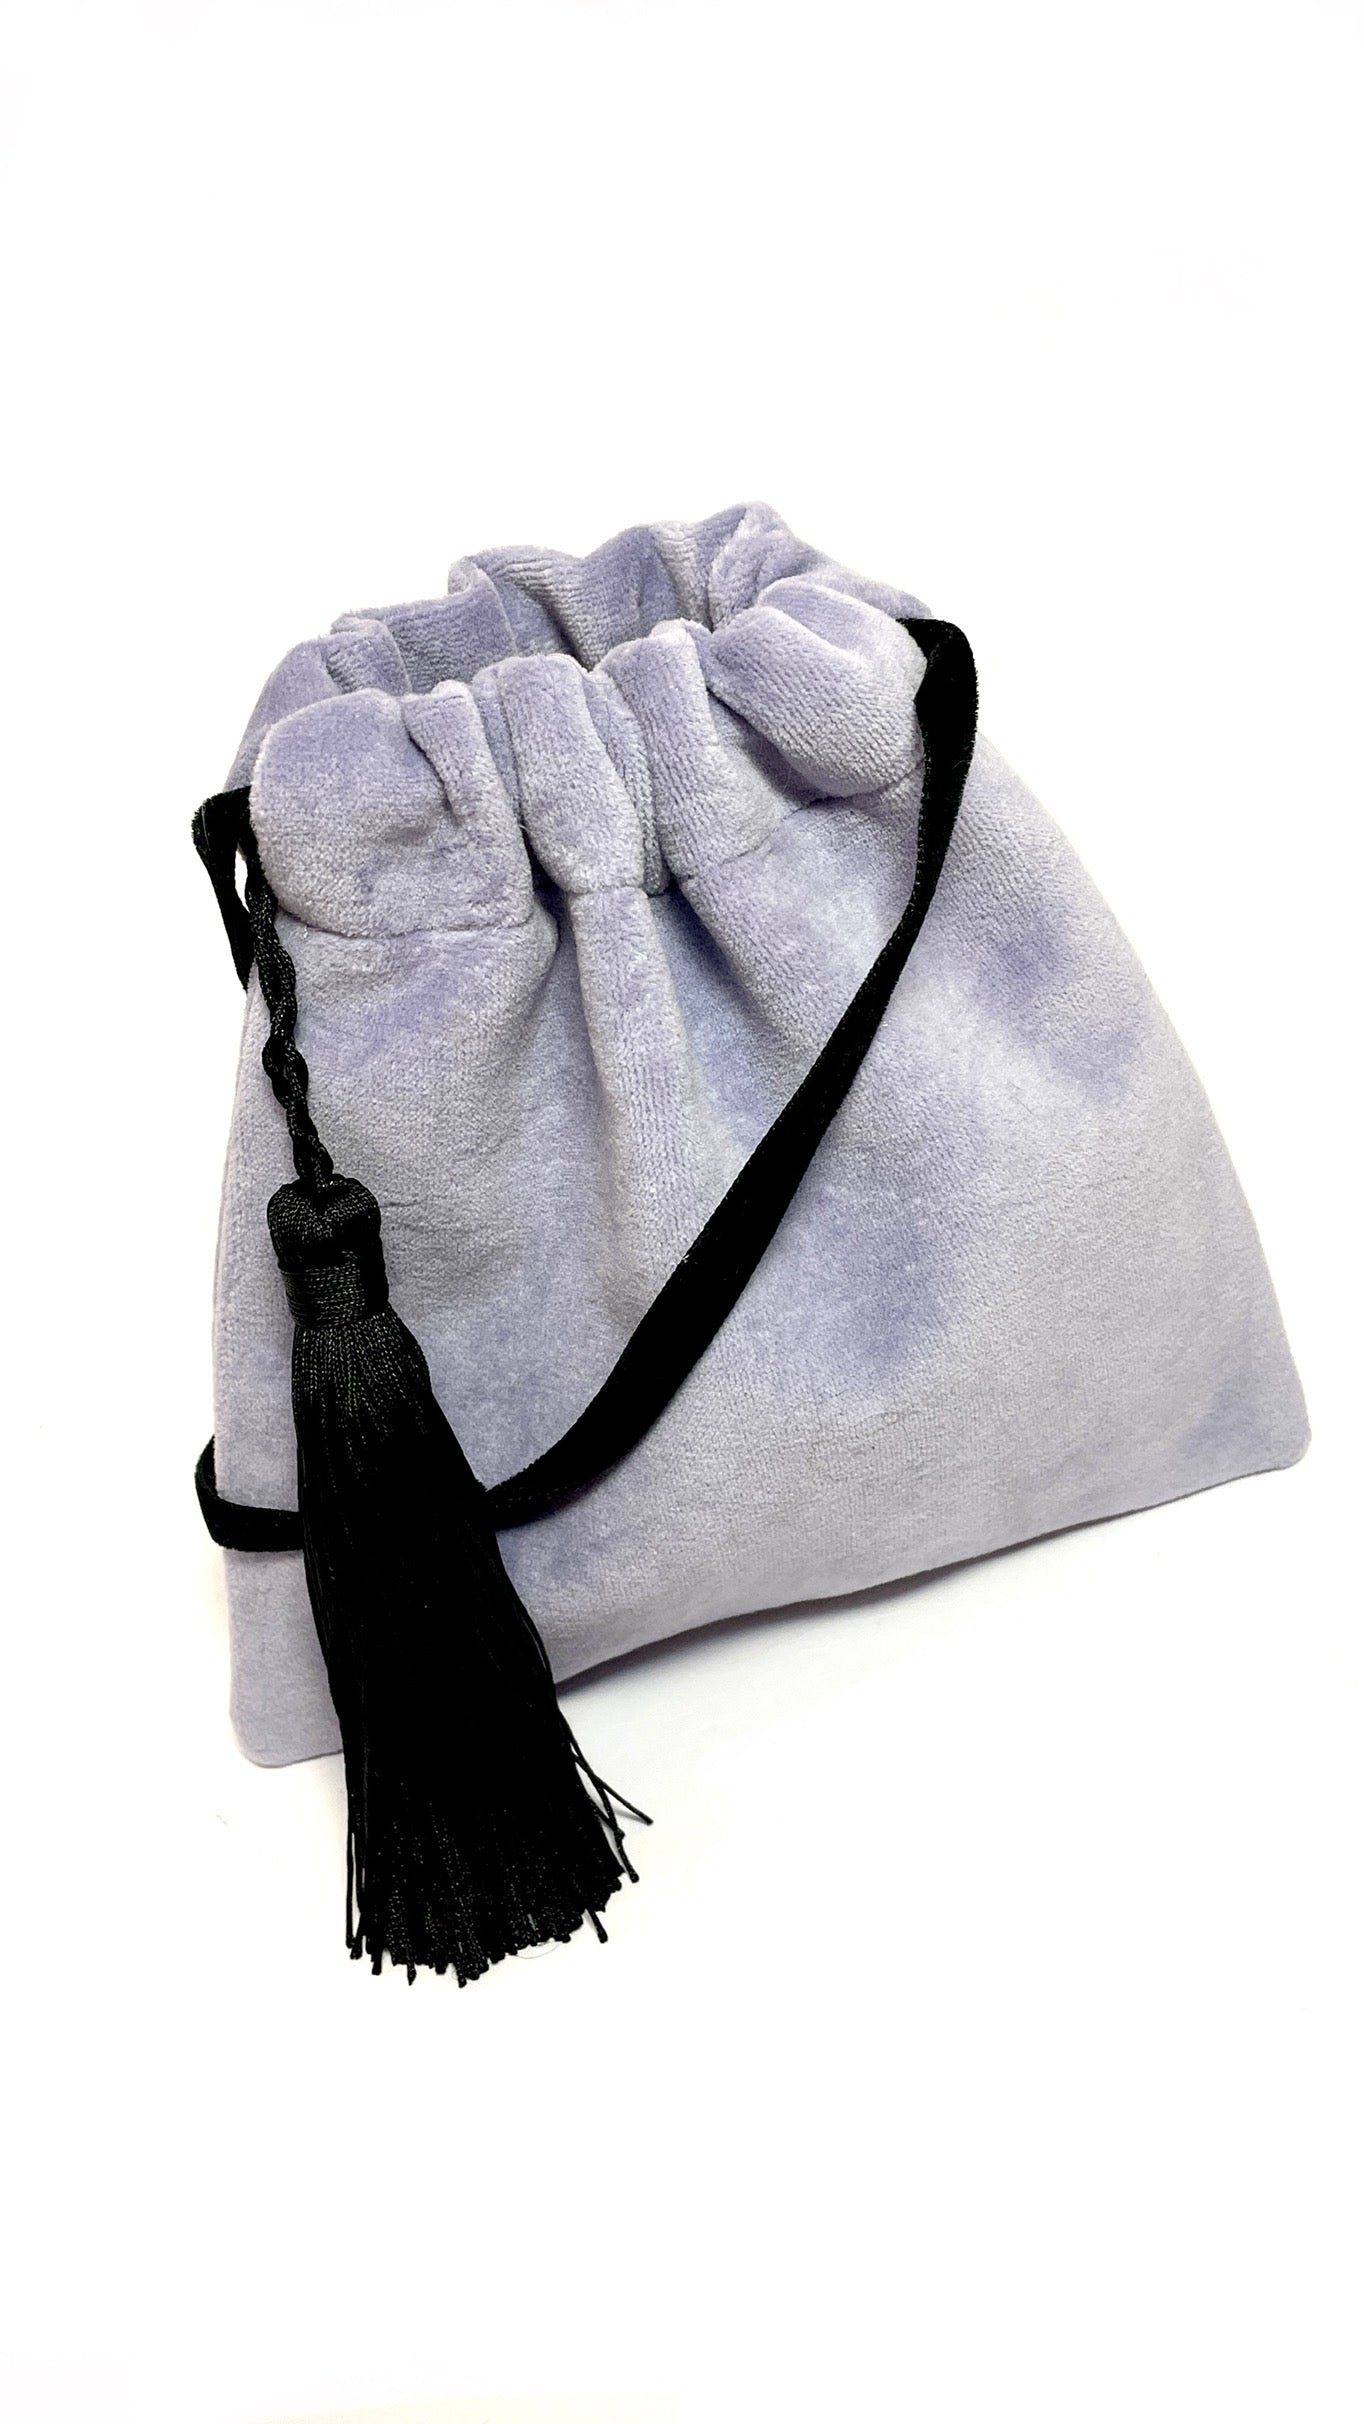 Lavender little handbag